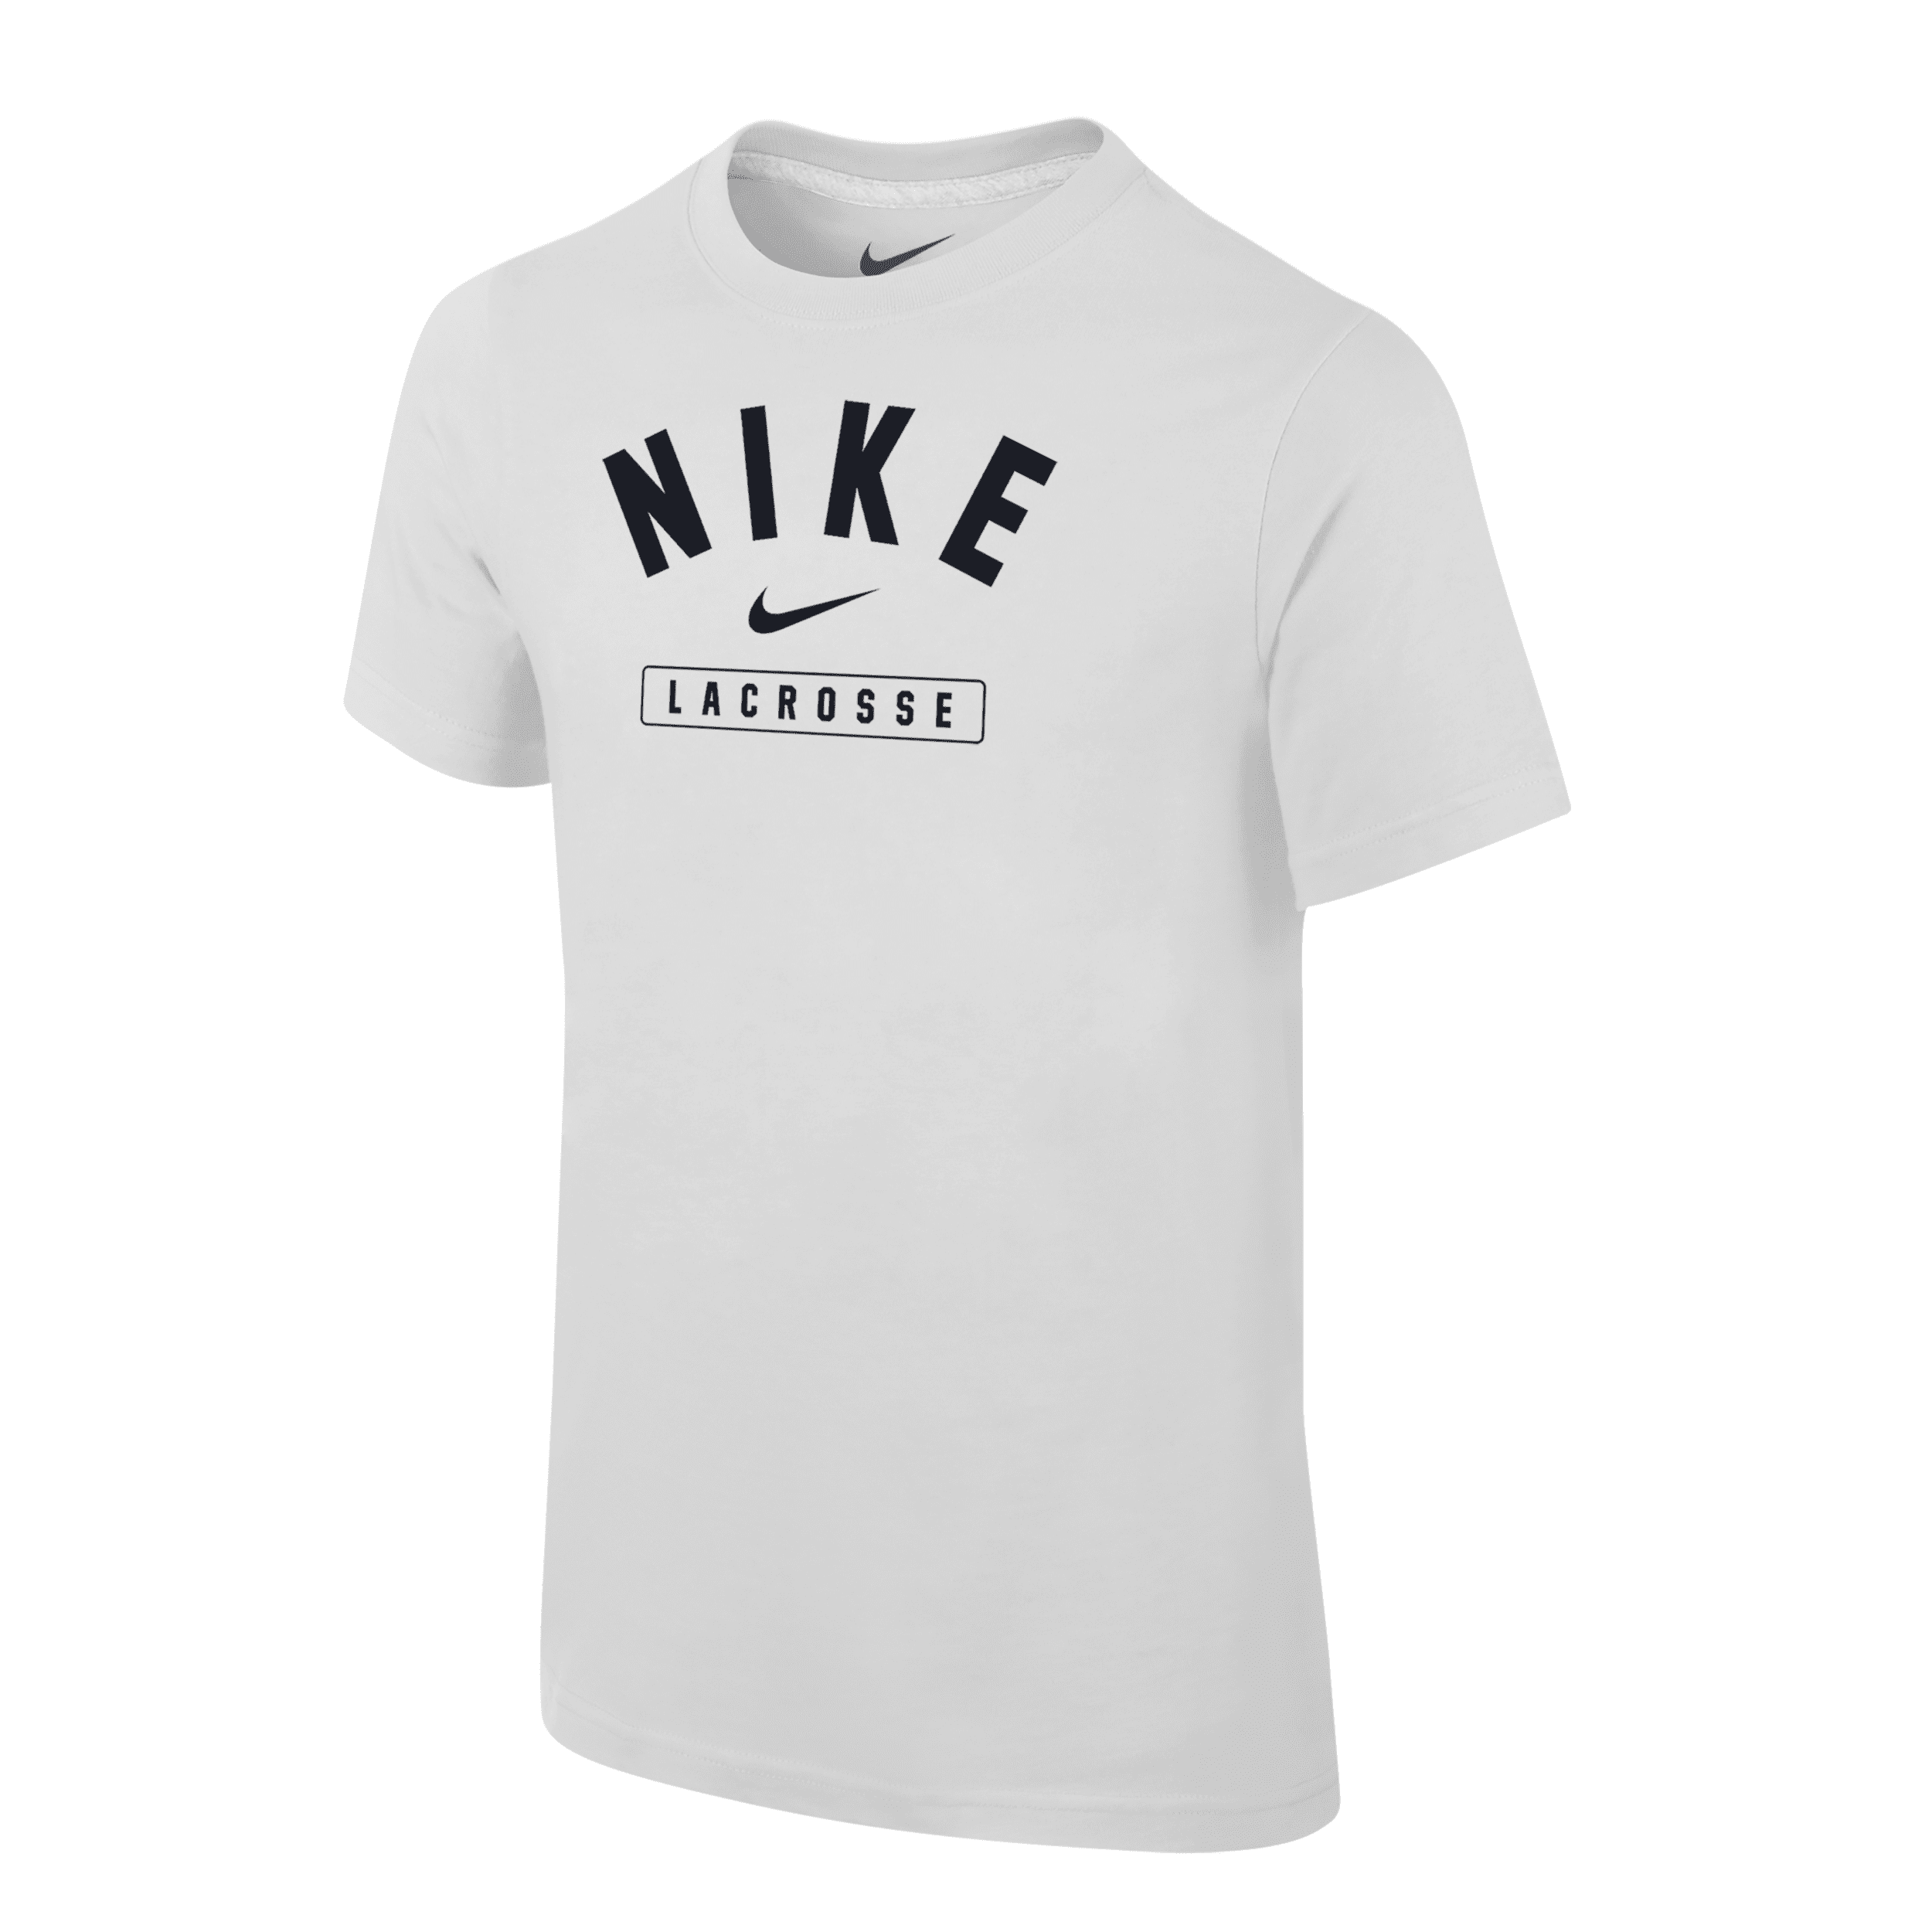 Nike Lacrosse Big Kids' (boys') T-shirt In White